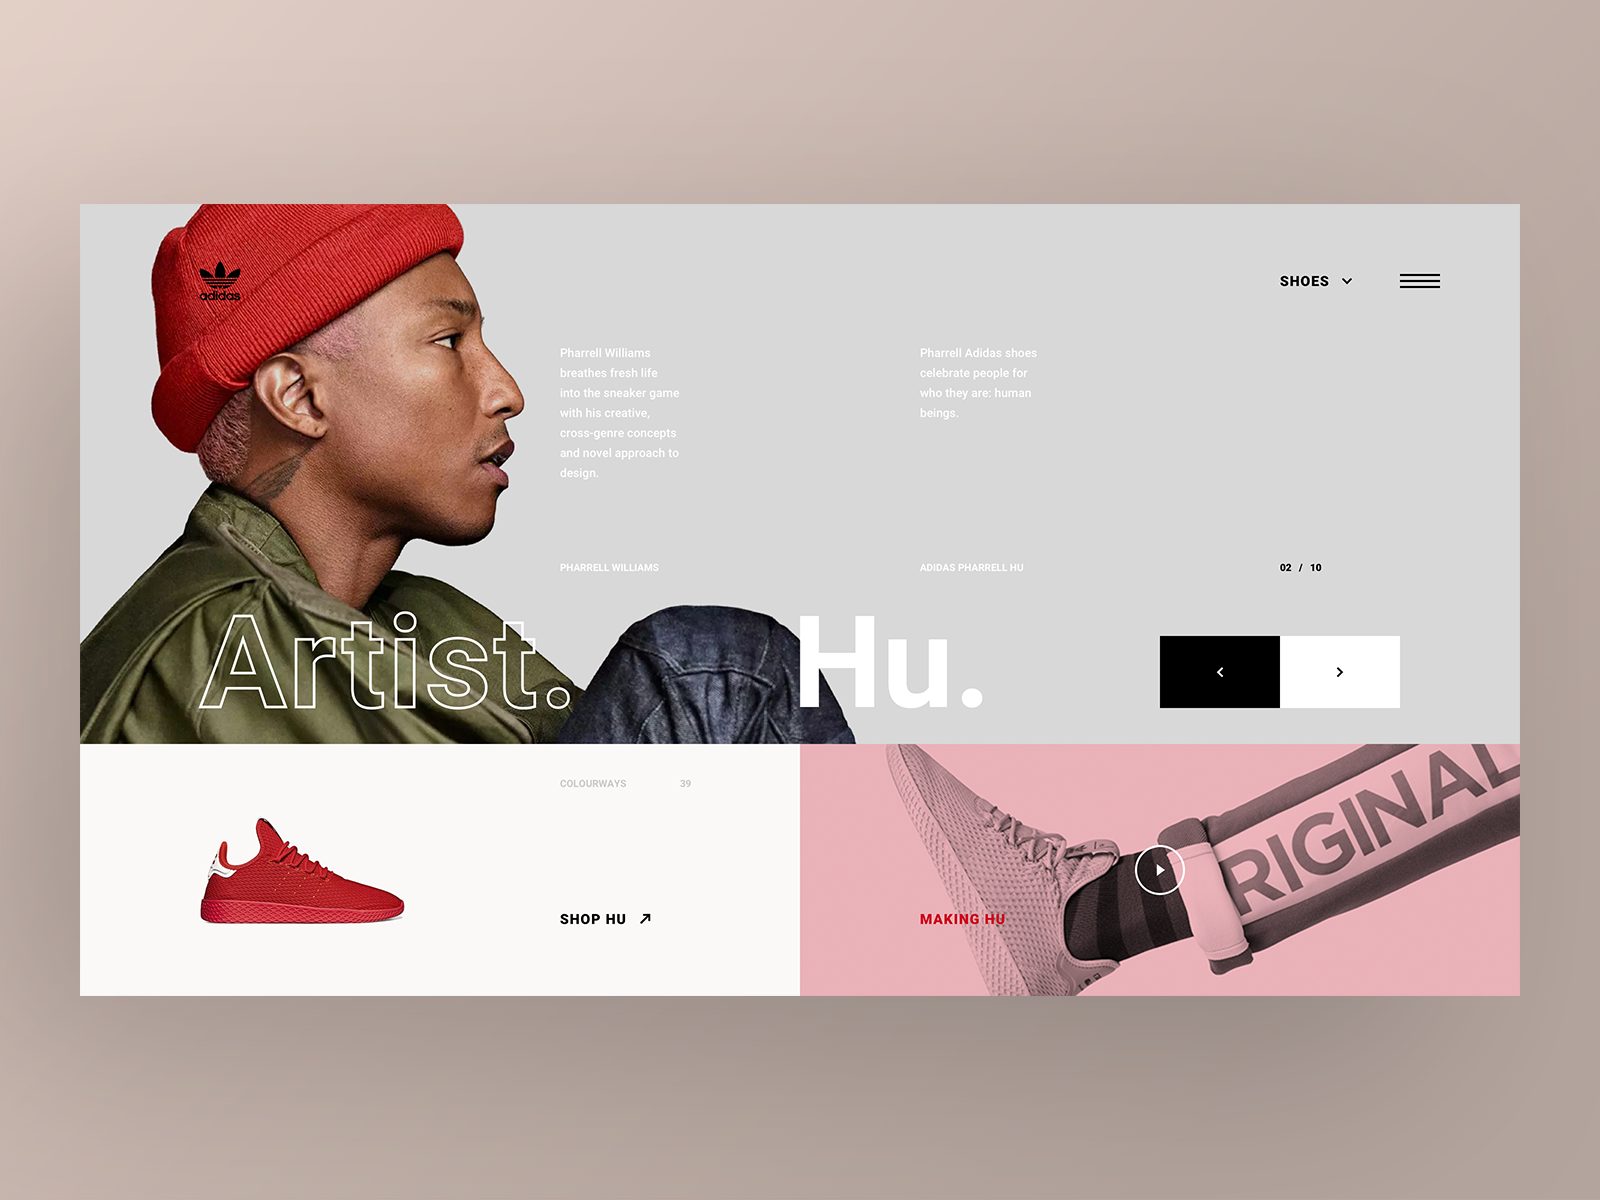 The adidas Originals x Pharrell Williams' collaboration color palette